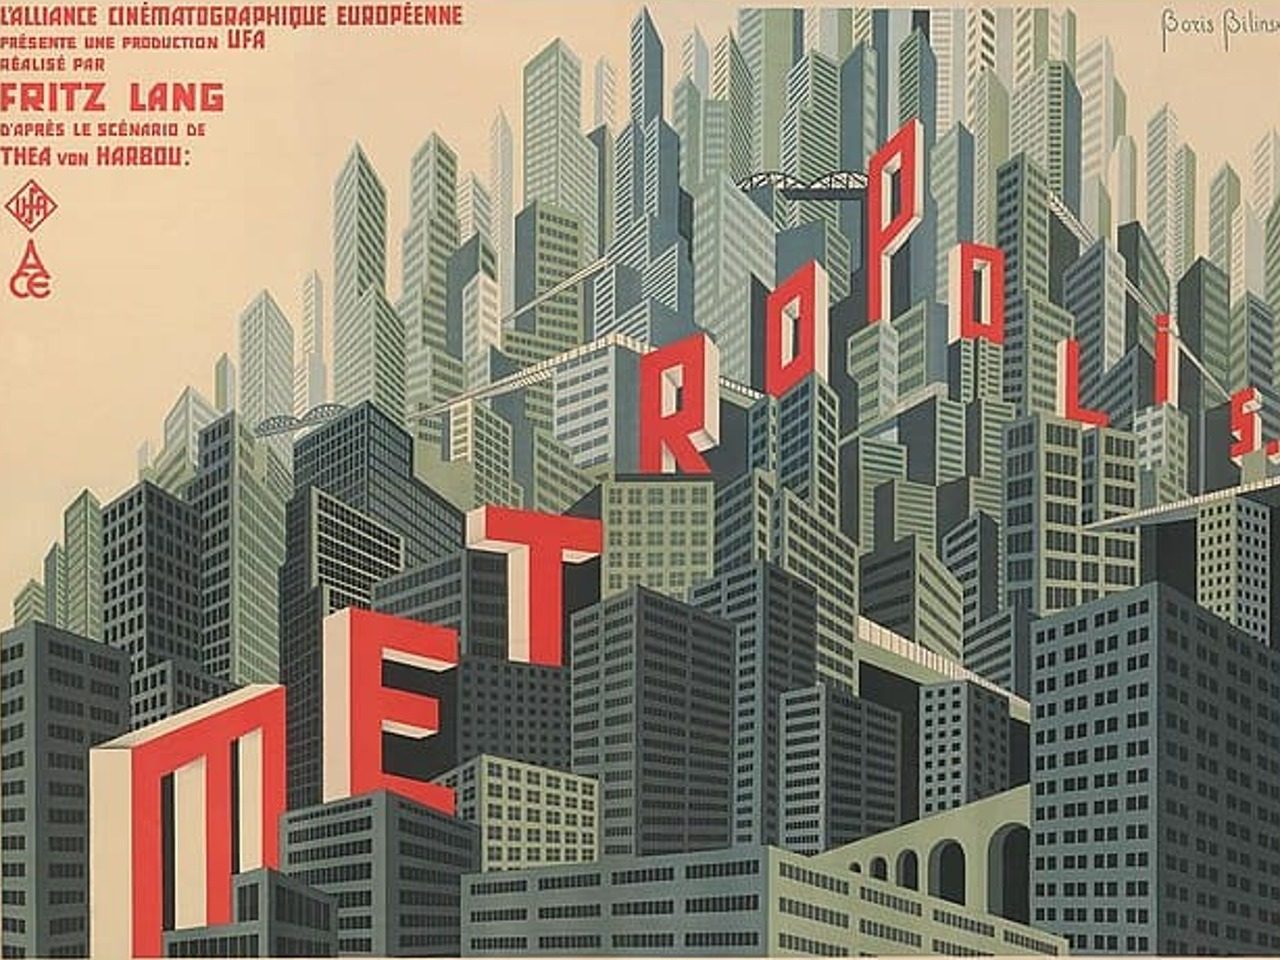 Affiche du film Metropolis de Fritz Lang, 1927 Boris Bilinski (1900-1948) Plakat für den Film Metropolis, Staatliche Museen zu Berlin